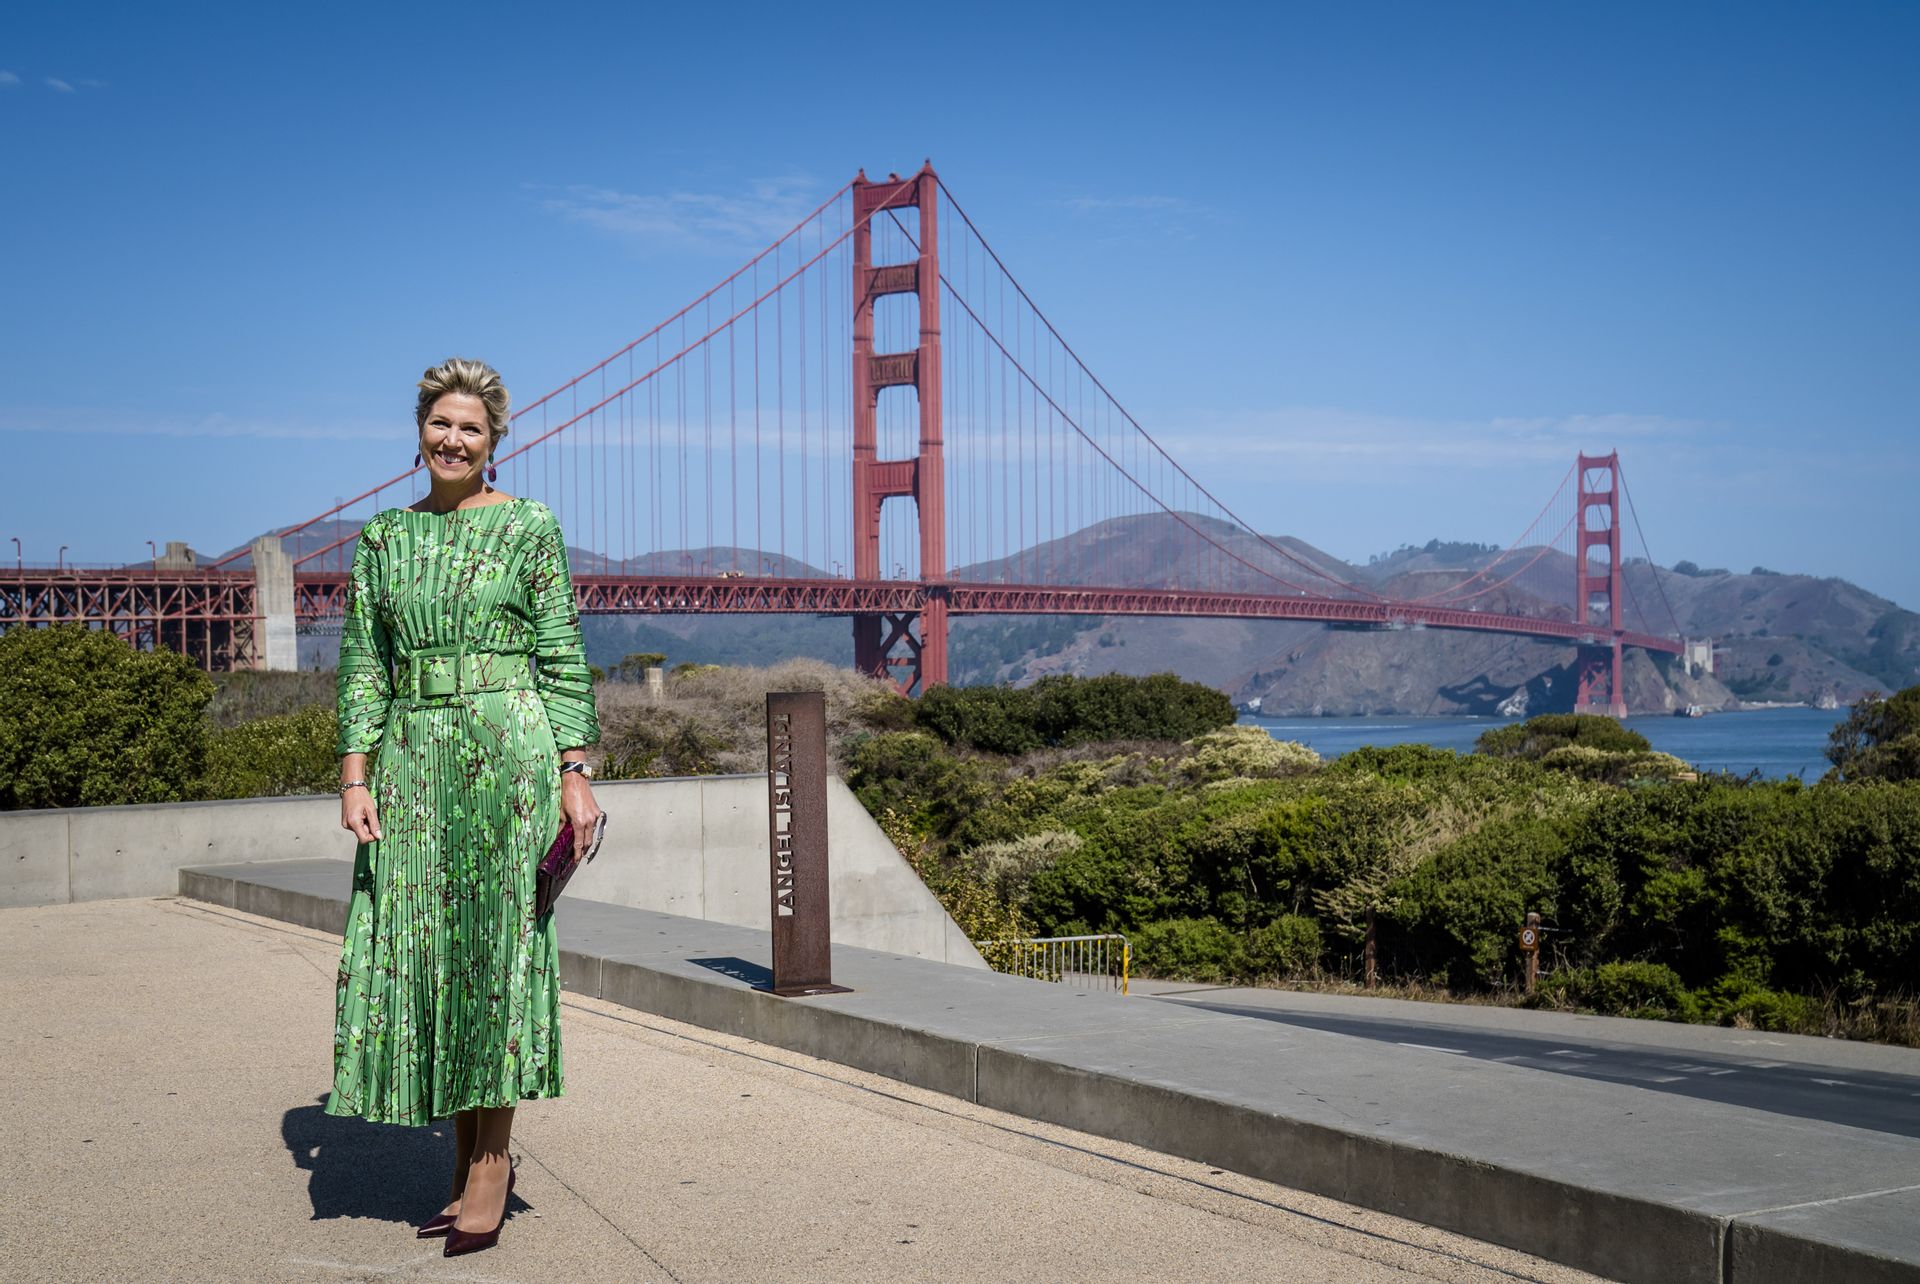 Maxima visits the Golden Gate Bridge